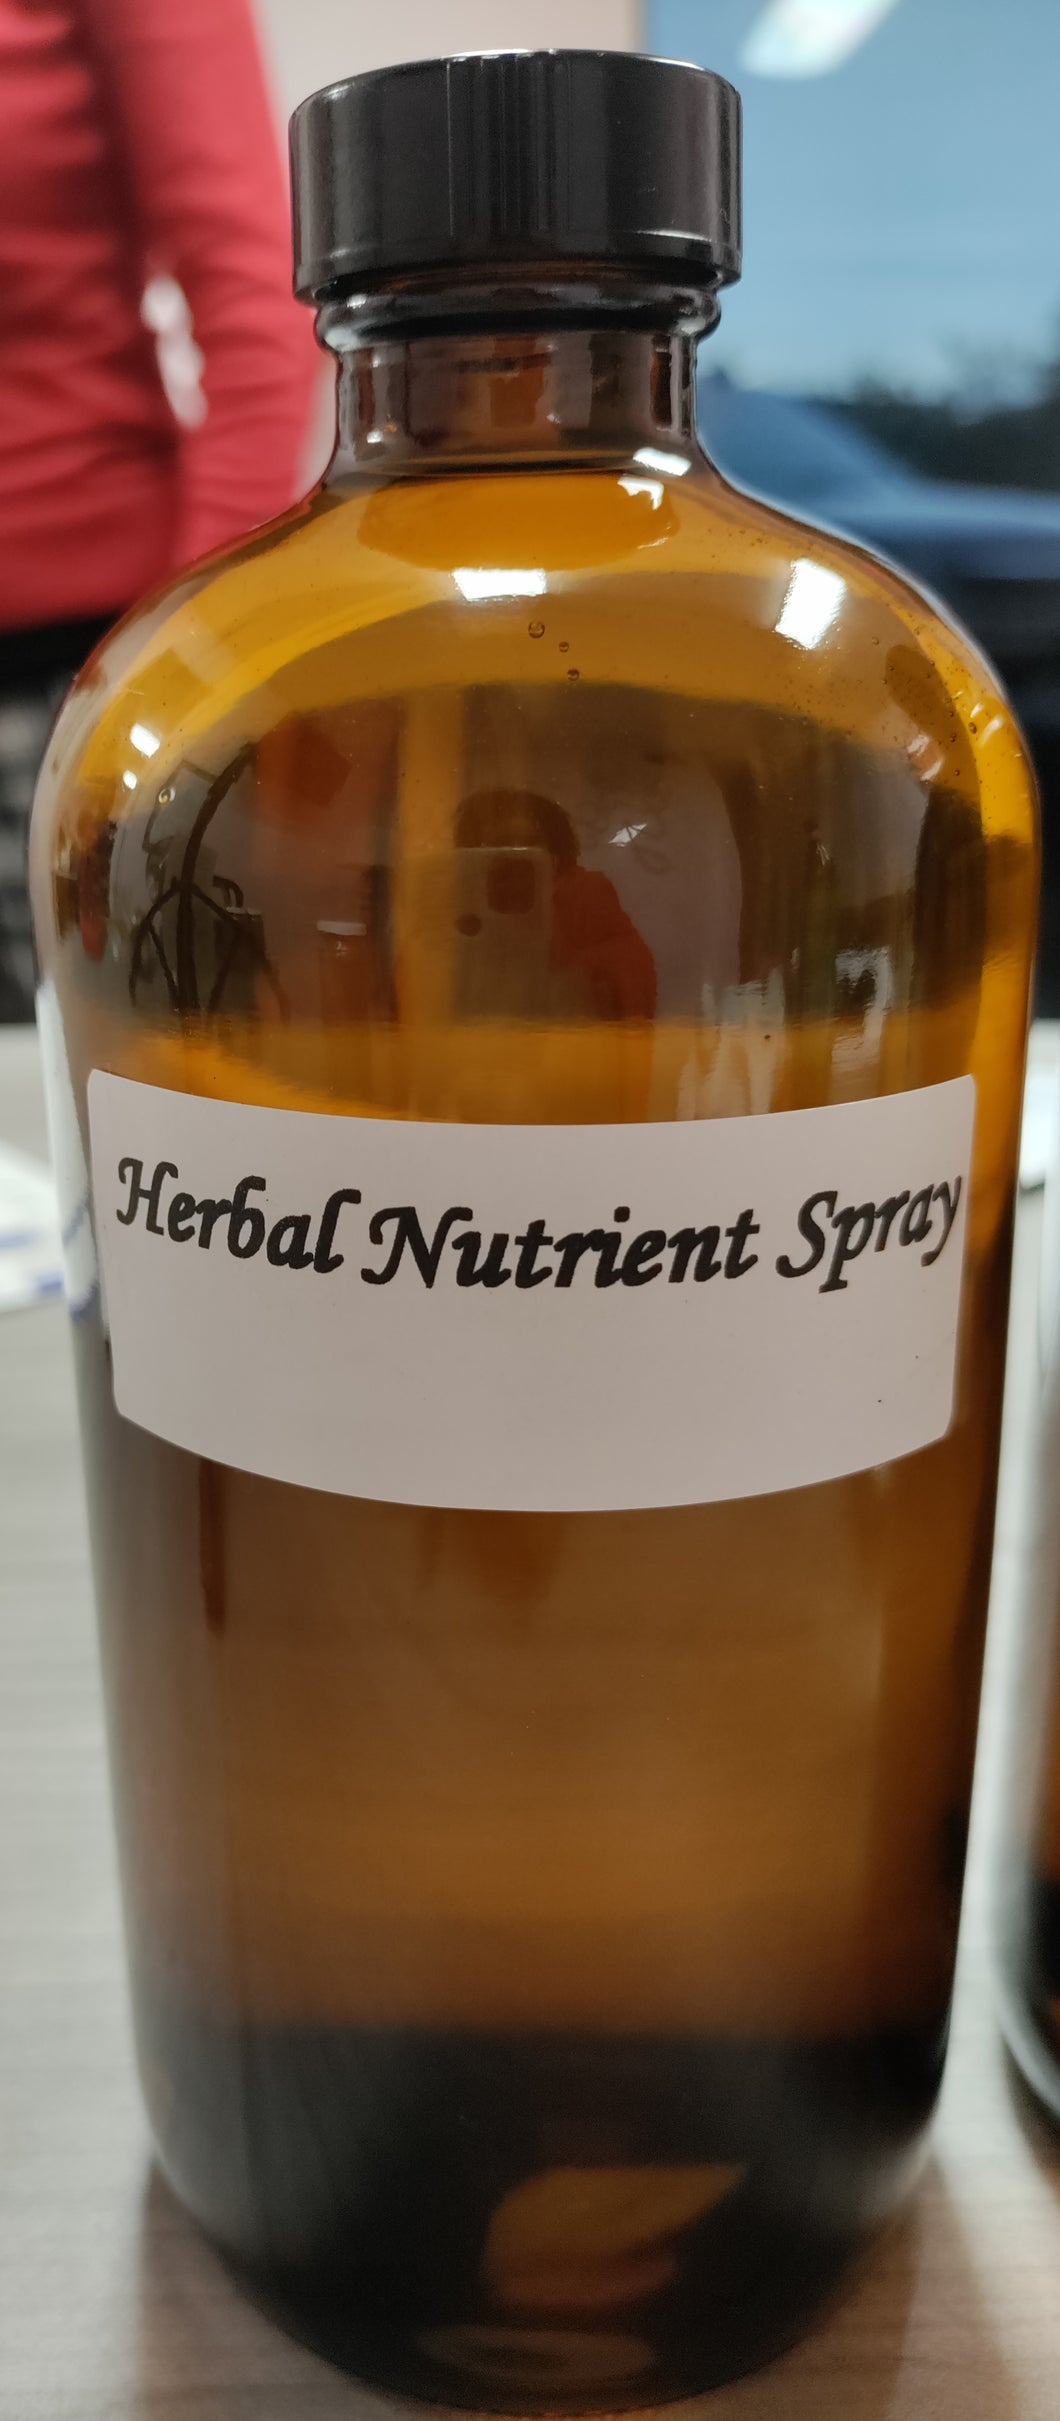 Herbal Nutrient Spray